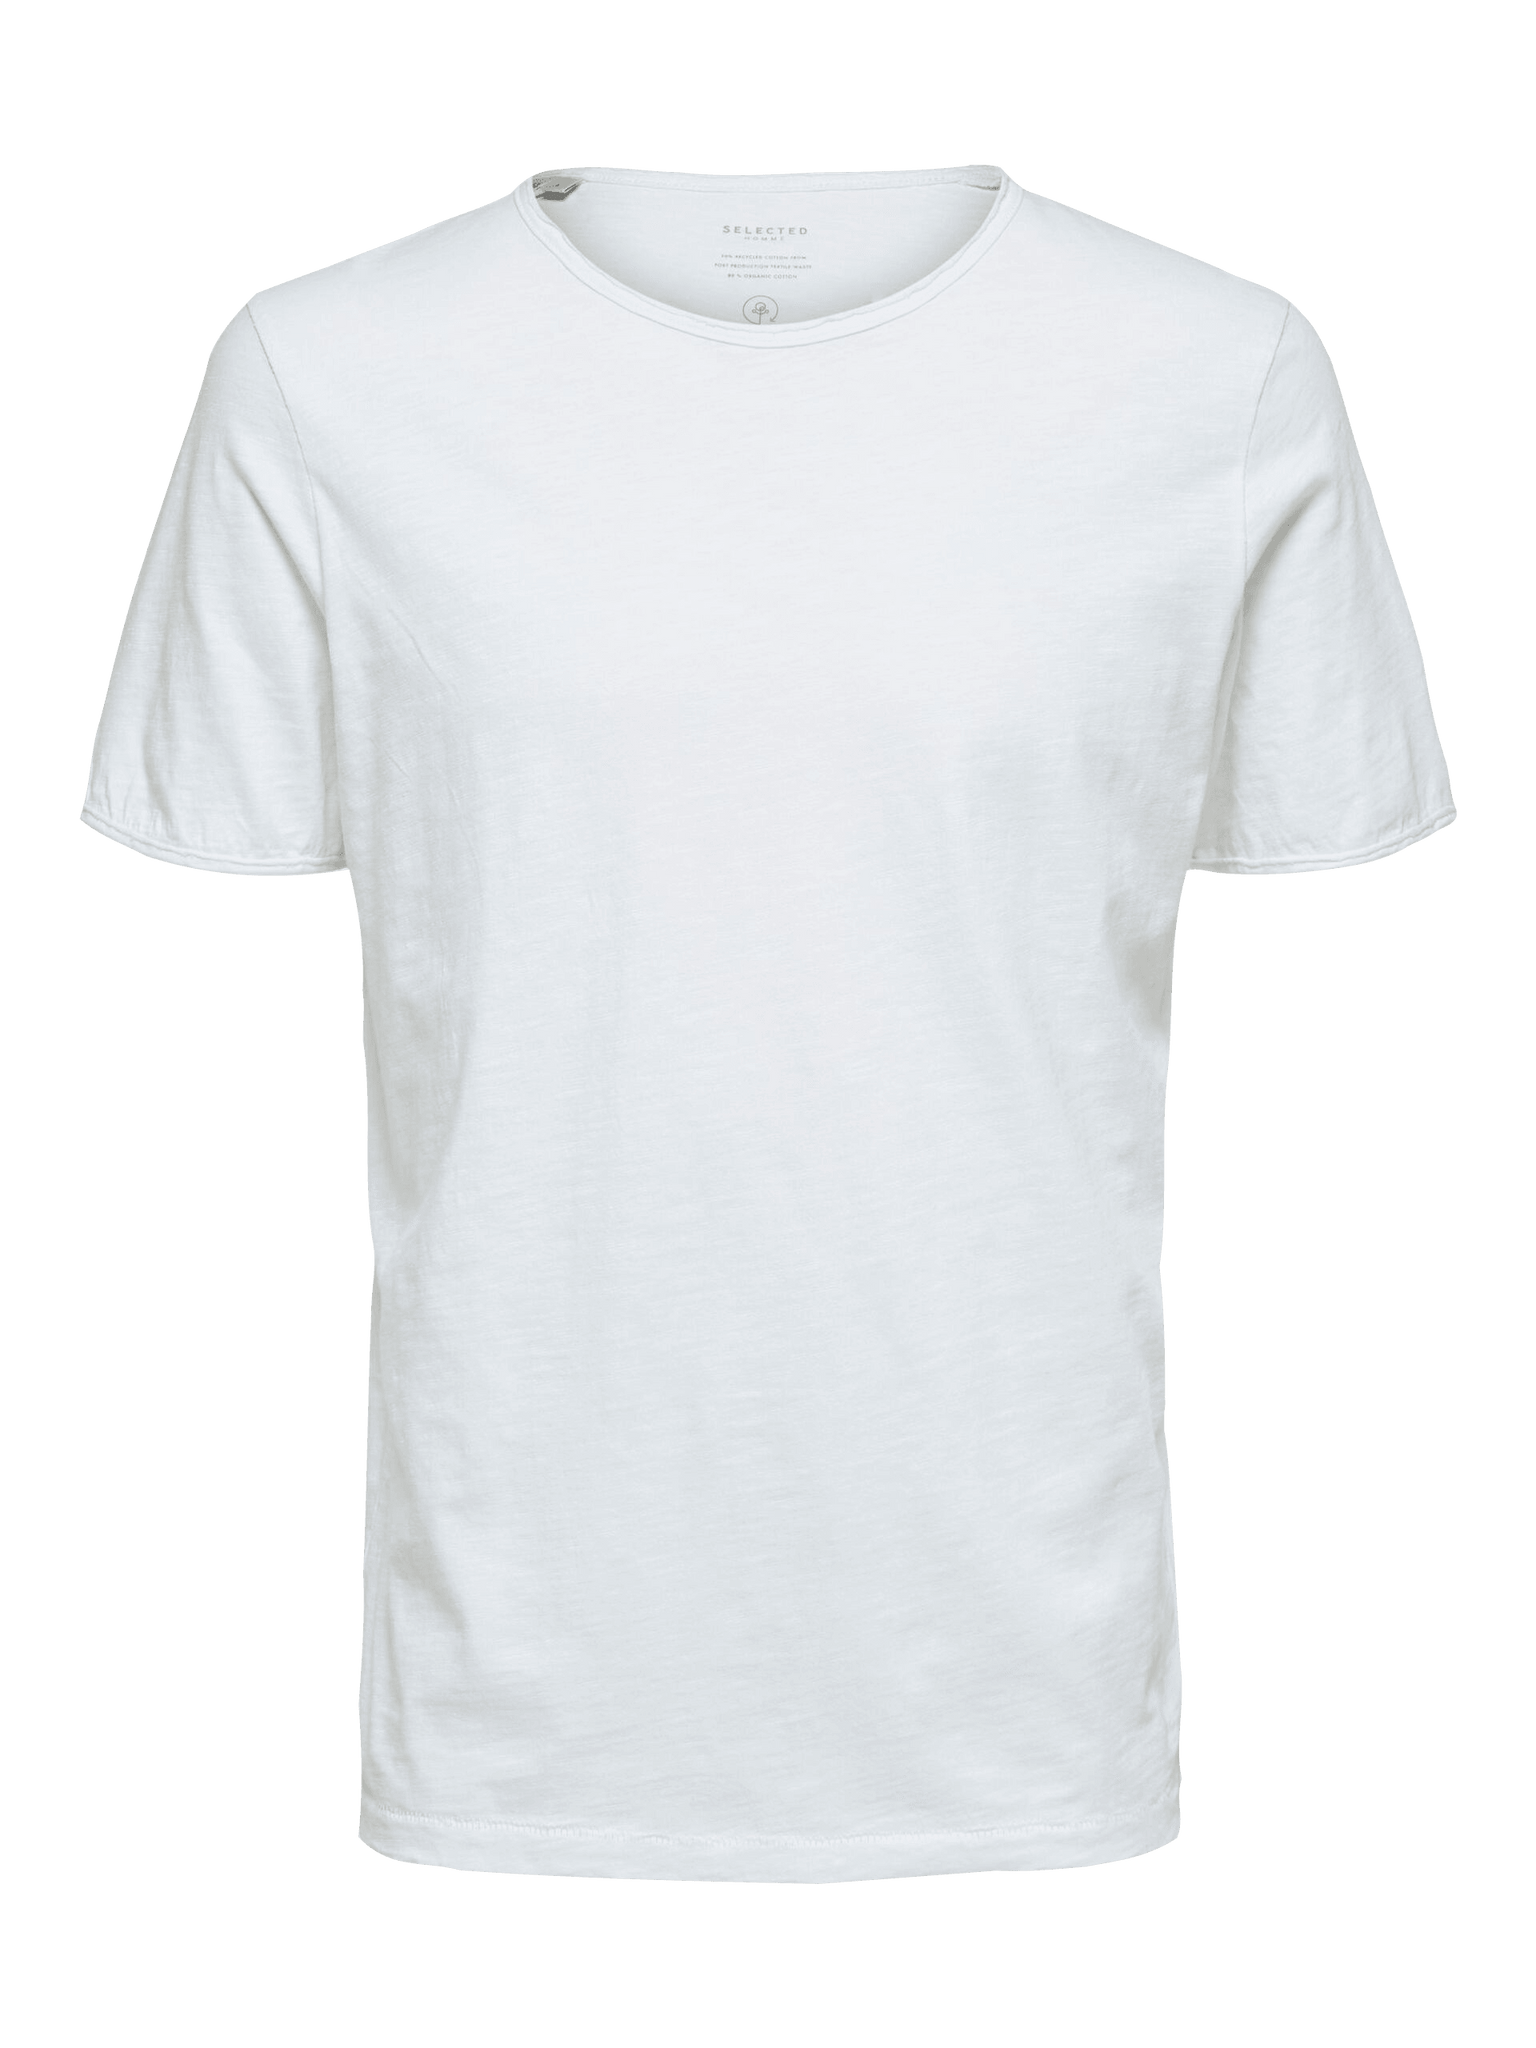 Camiseta Morgan Bright White - ECRU